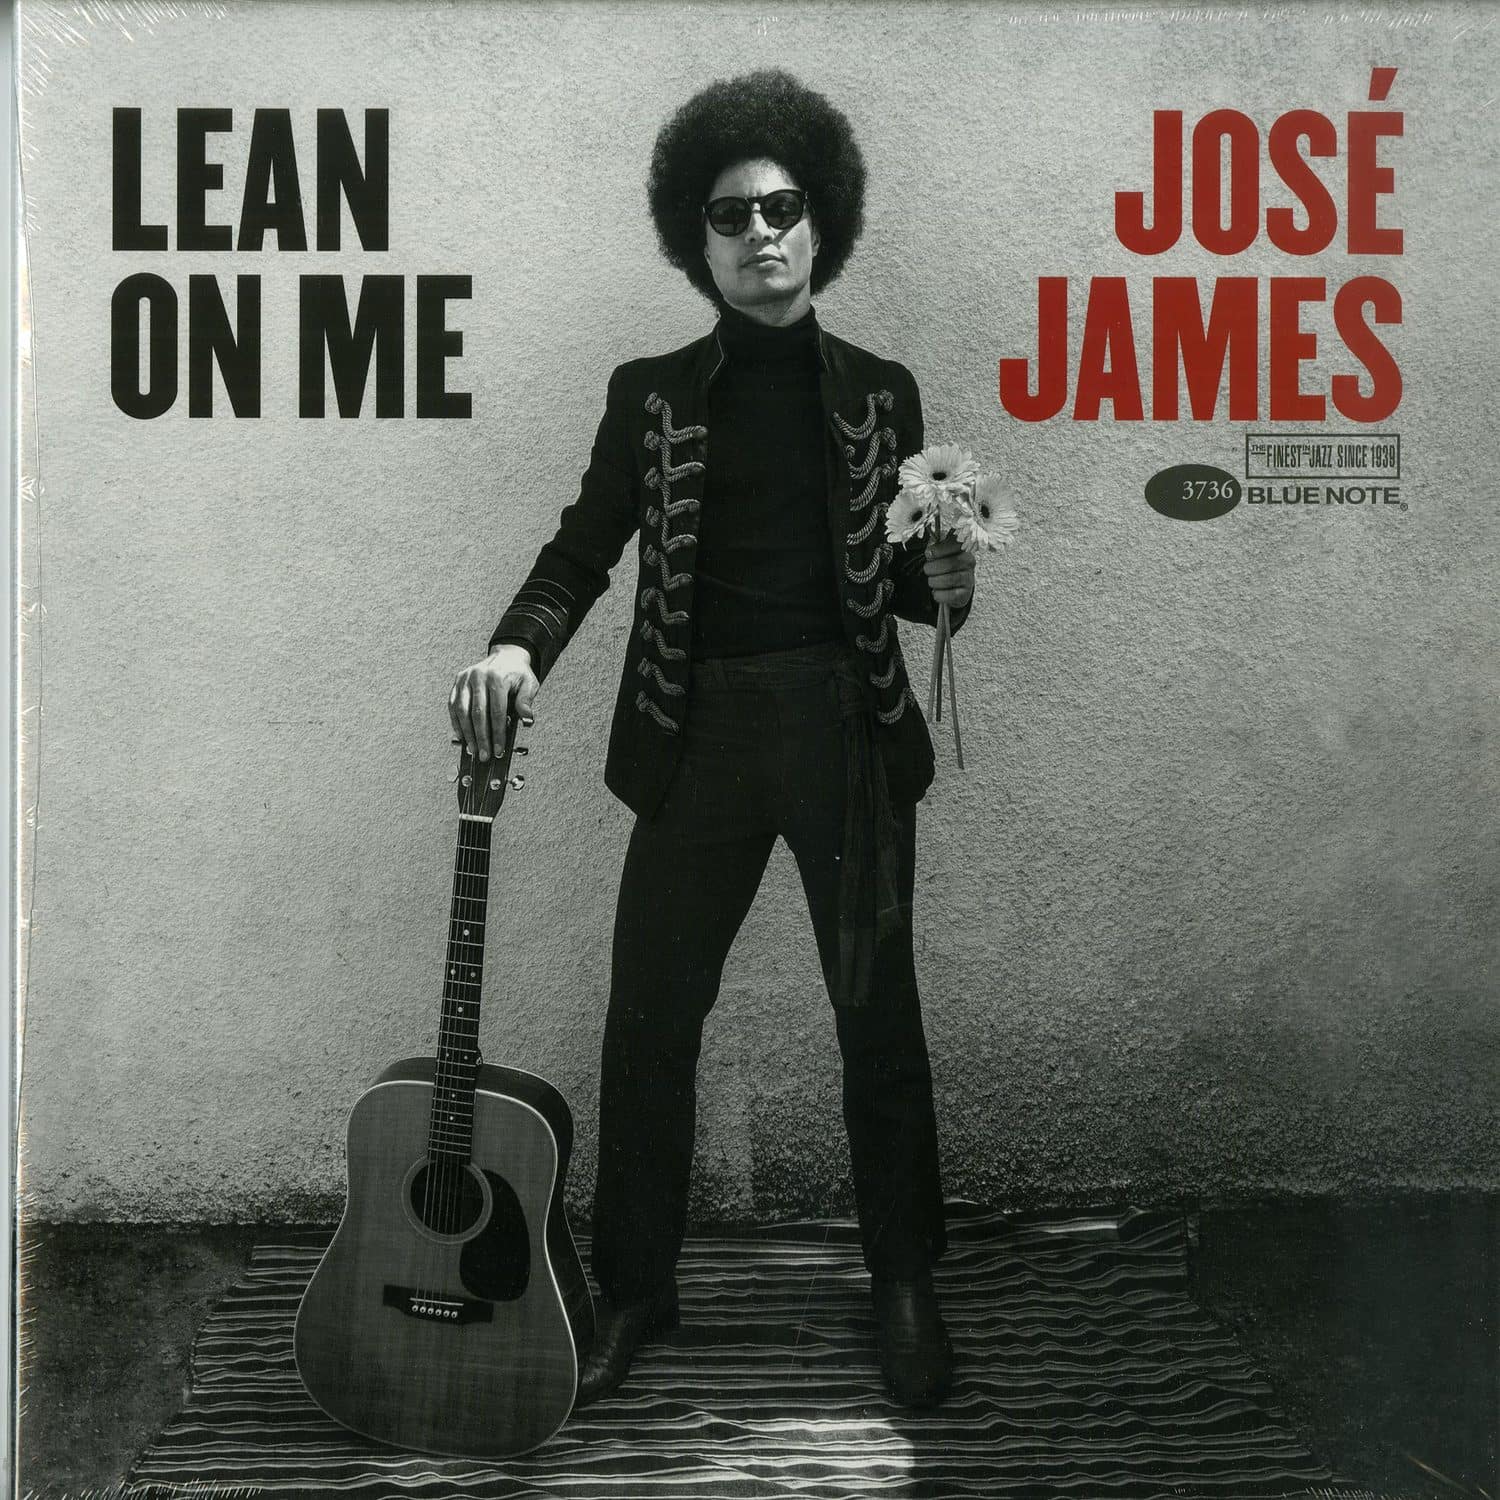 Jose James - LEAN ON ME 